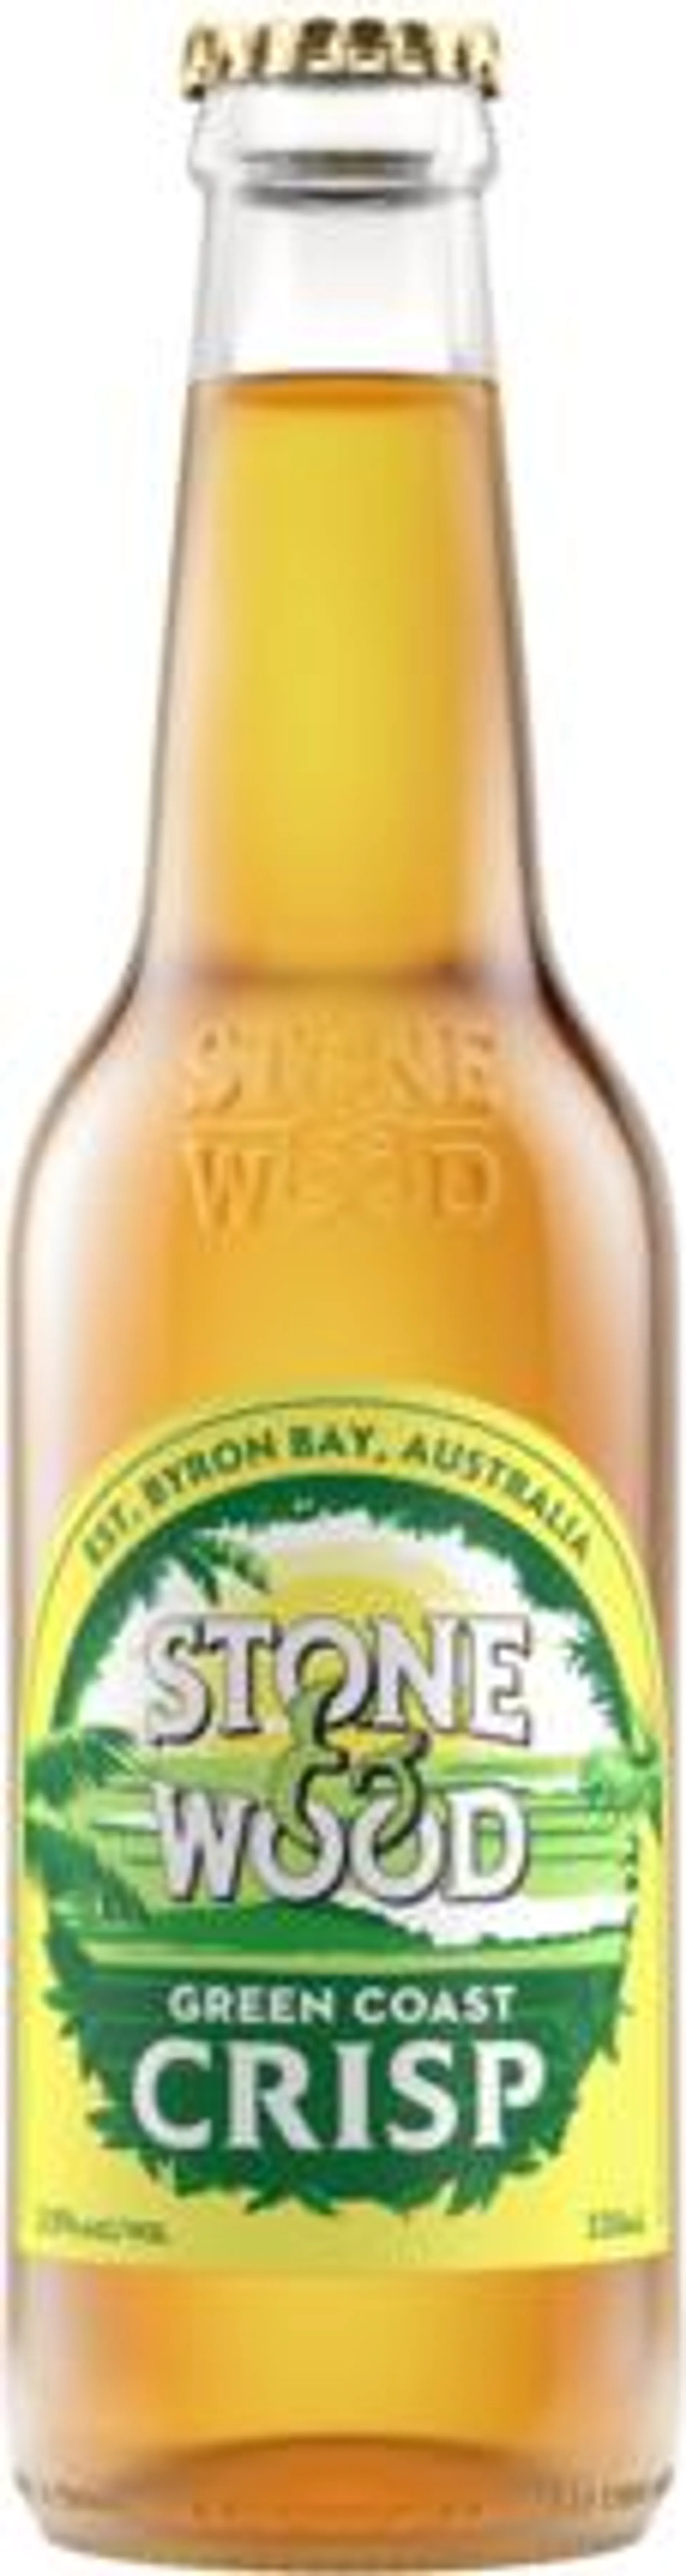 Stone & Wood Green Coast Crisp Lager 3.5% Bottle 1X330ML